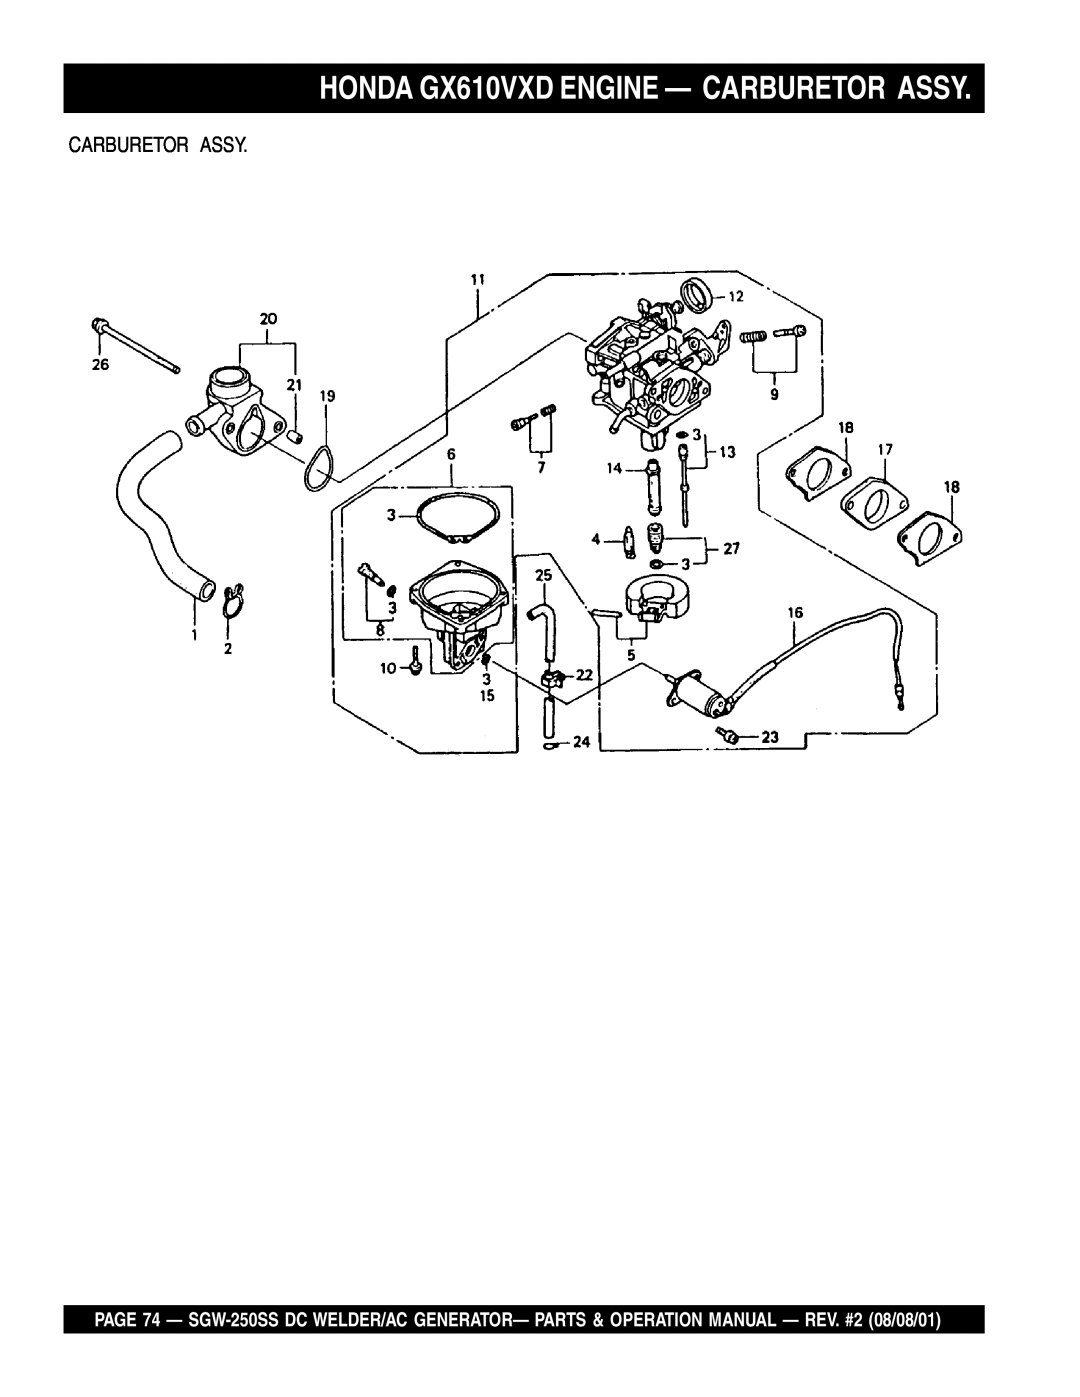 Multiquip SGW-250SS operation manual HONDA GX610VXD ENGINE - CARBURETOR ASSY, Carburetor Assy 